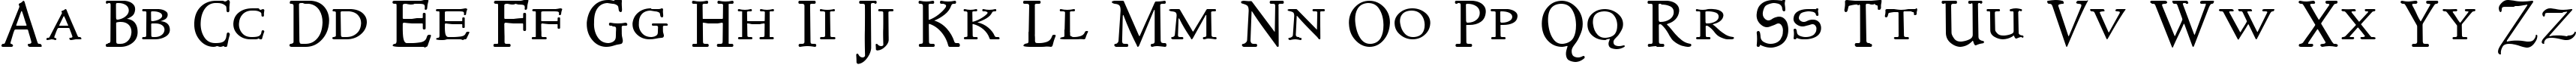 Пример написания английского алфавита шрифтом NewStyleTitling